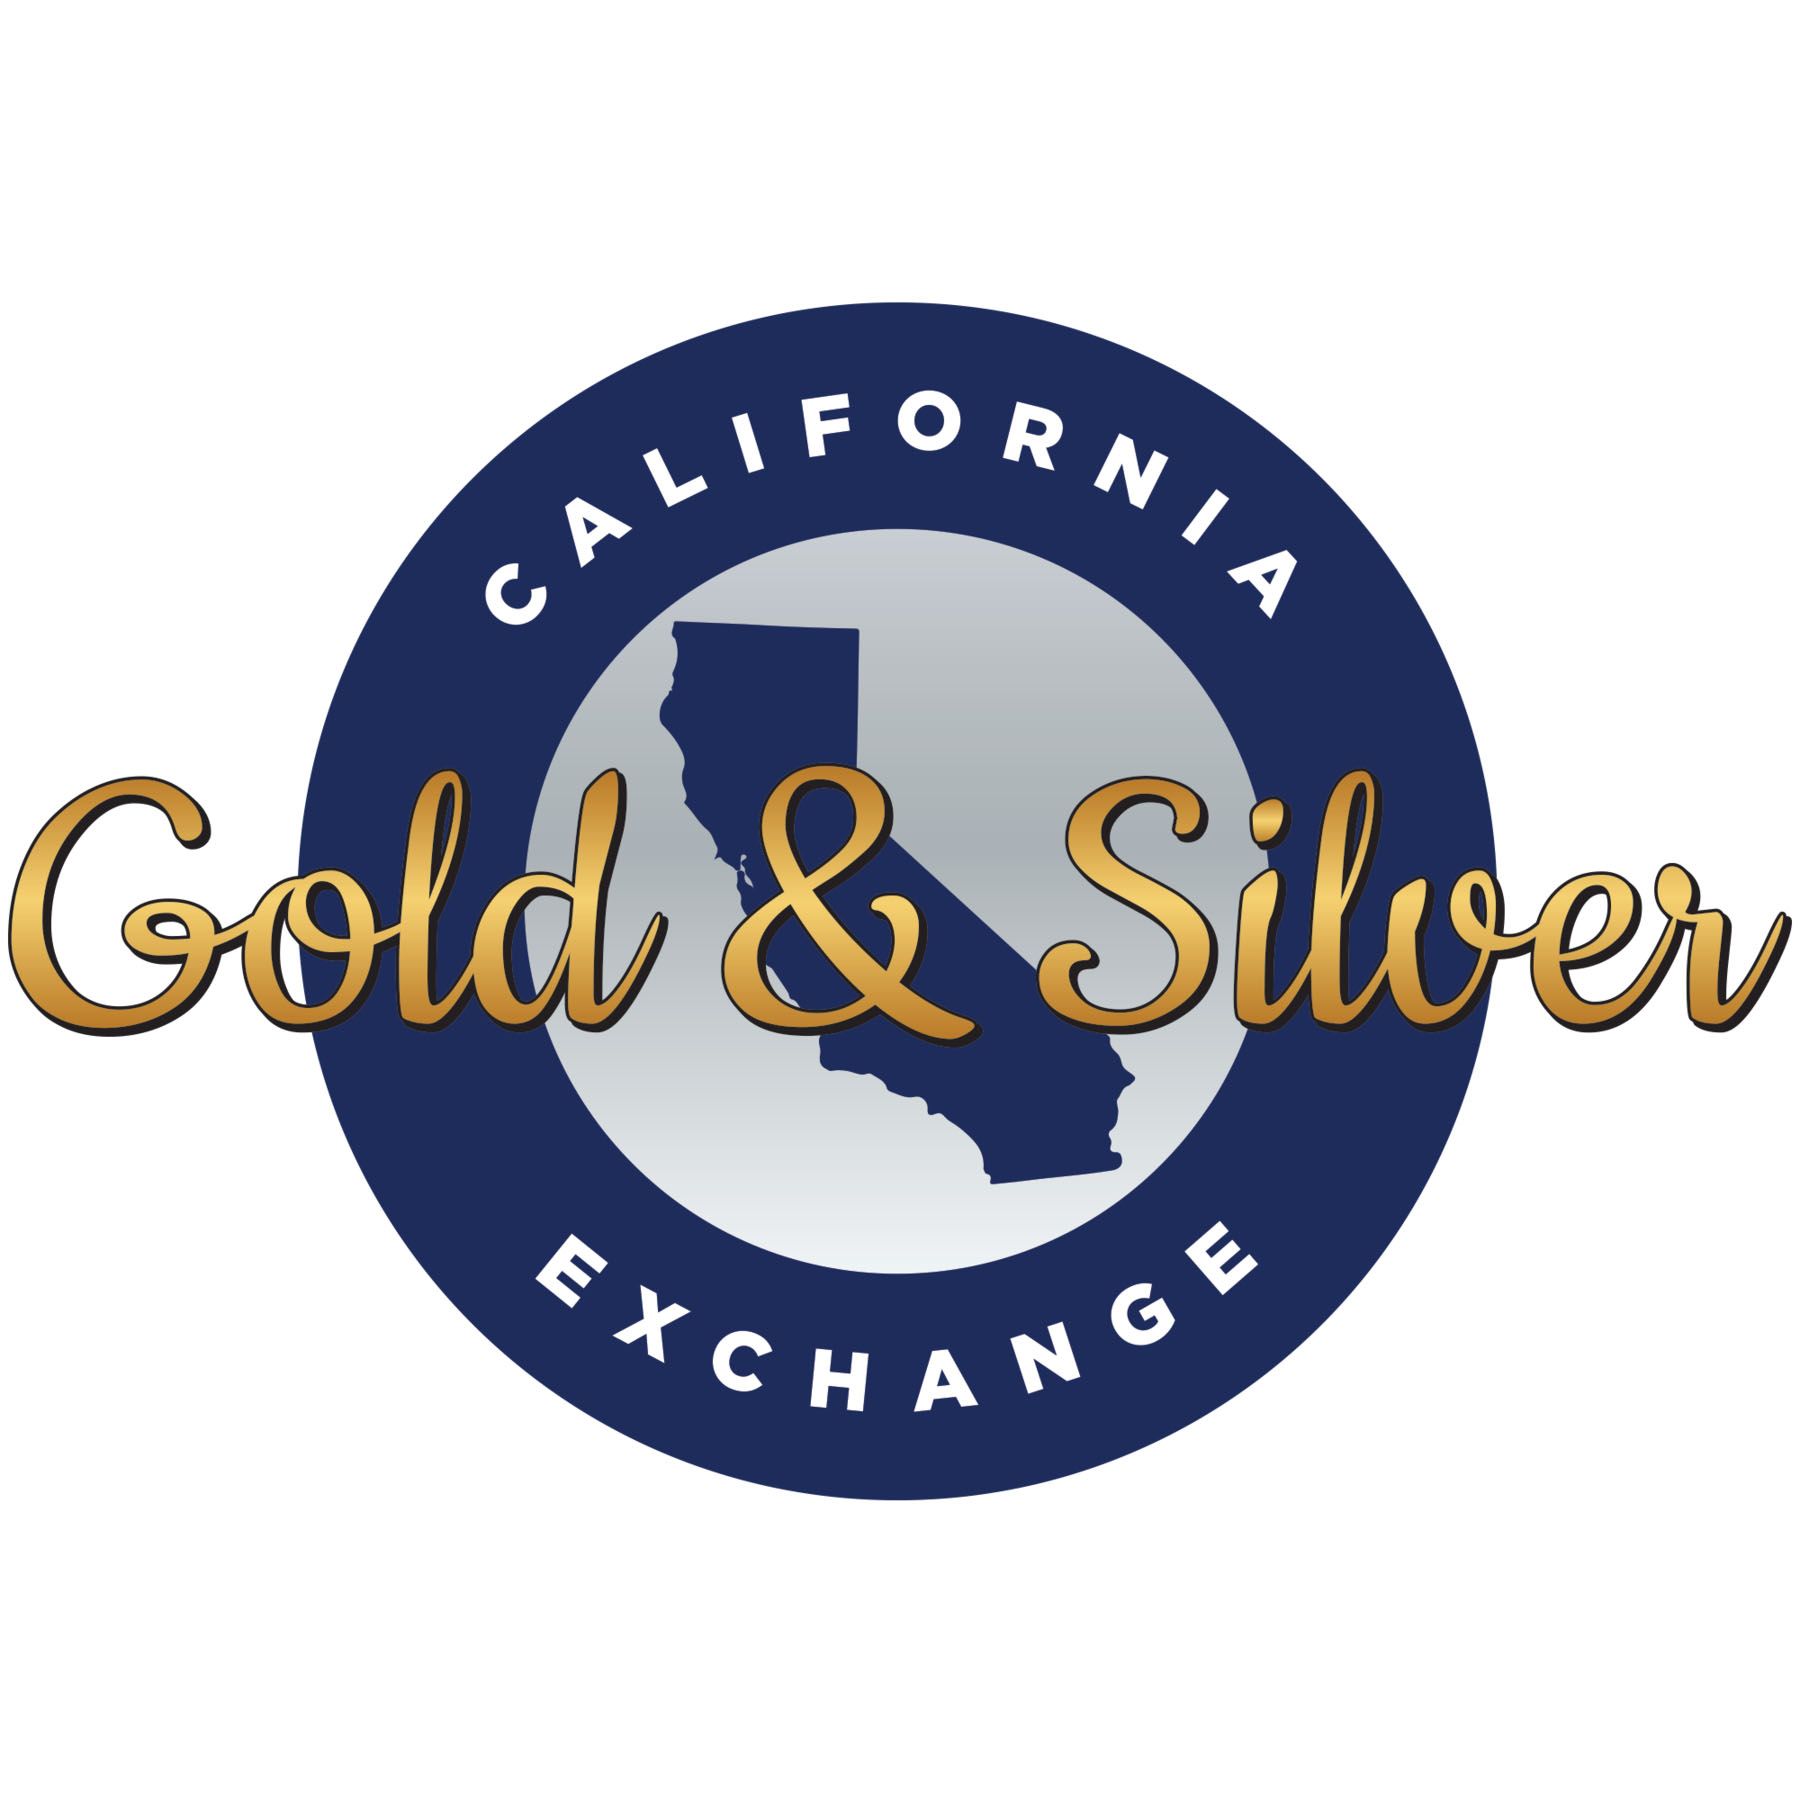 California Gold & Silver Exchange Better Business Bureau® Profile